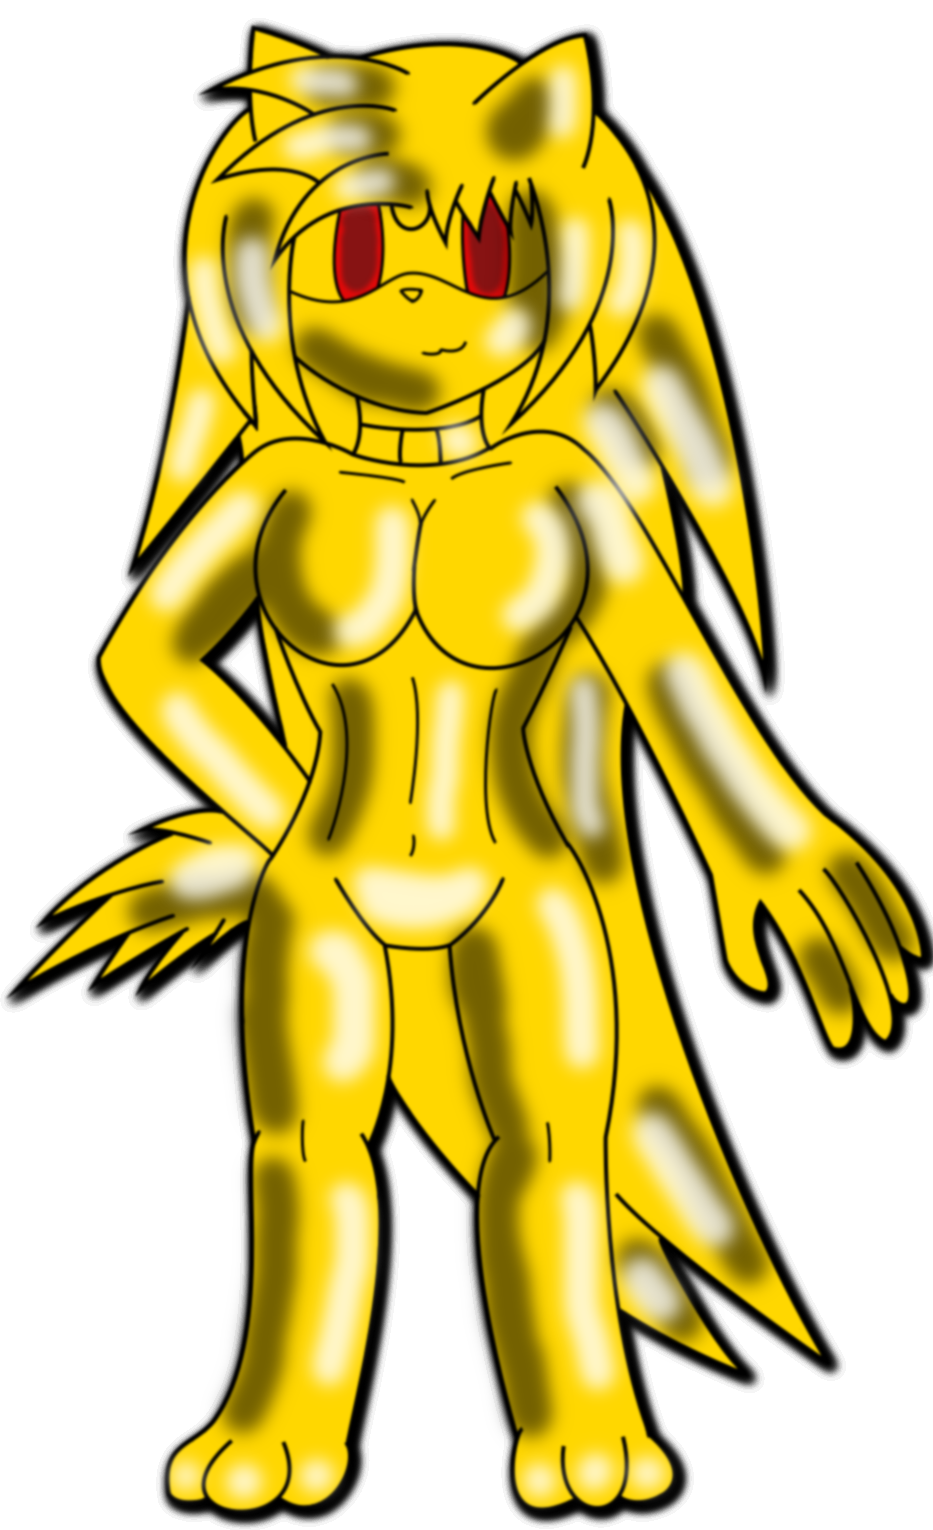 18+ Stuff: Kechi in Gold latex tight body suit